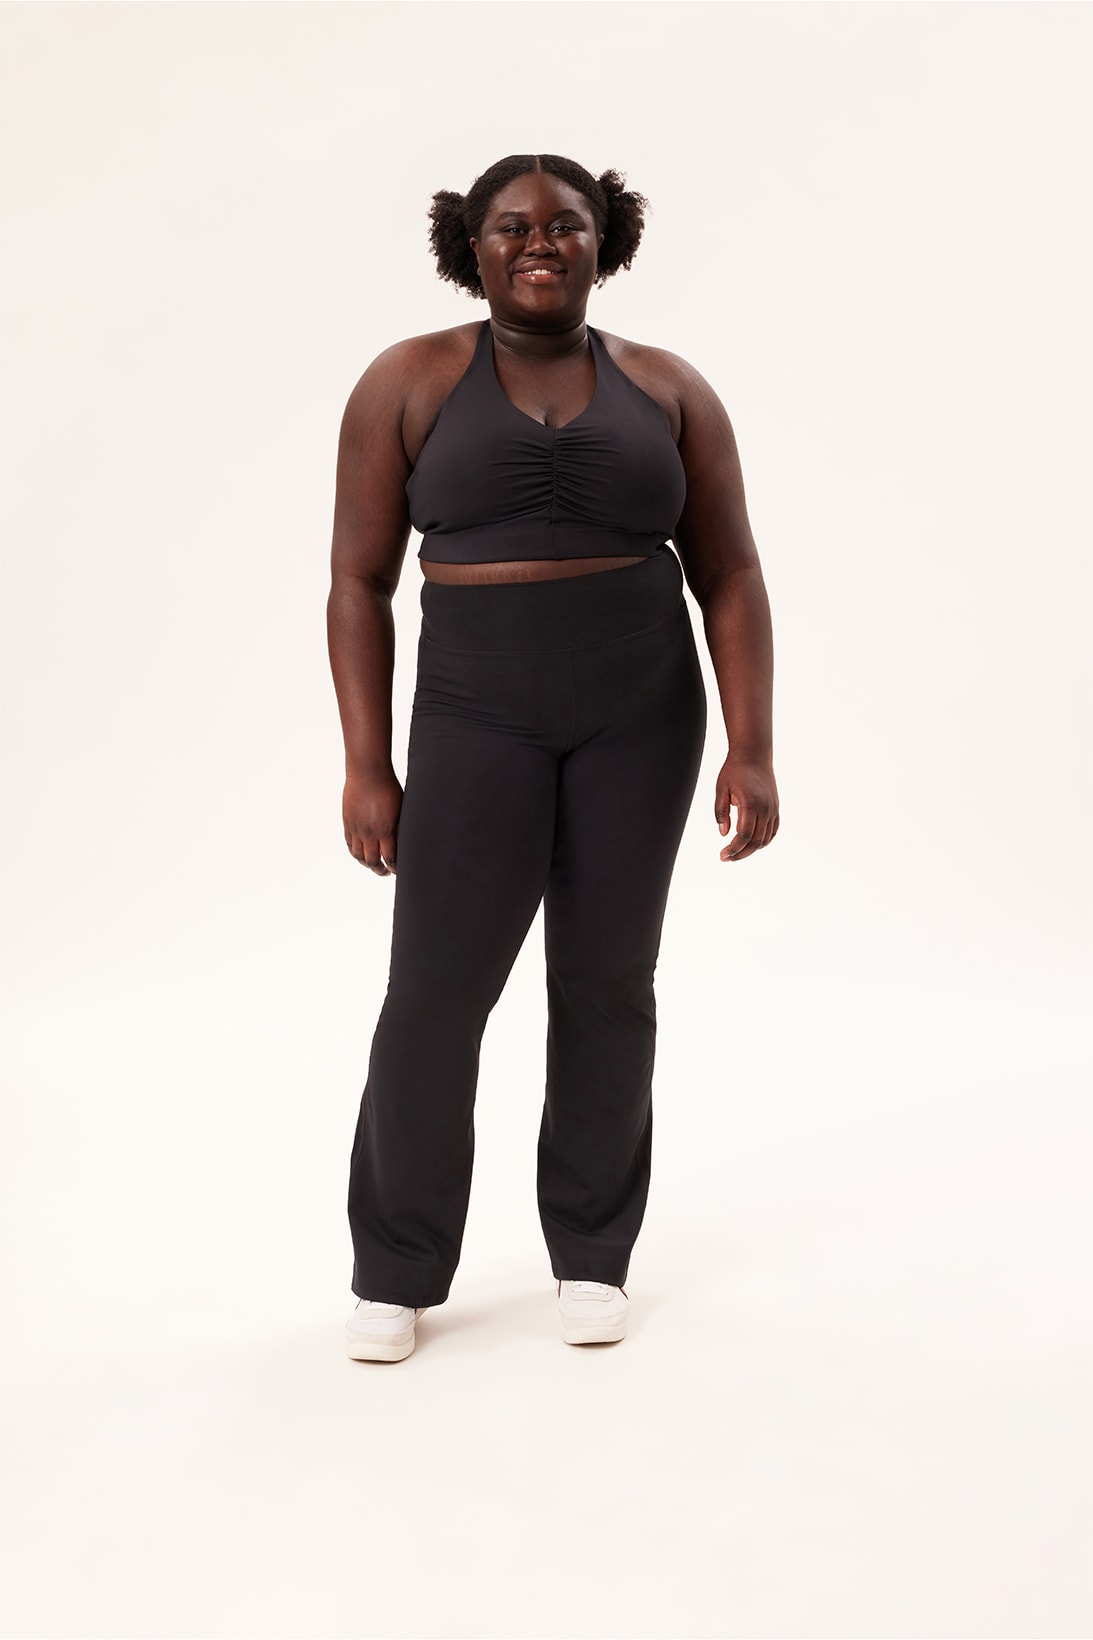 Carhartt launches new women's leggings - Installer Online